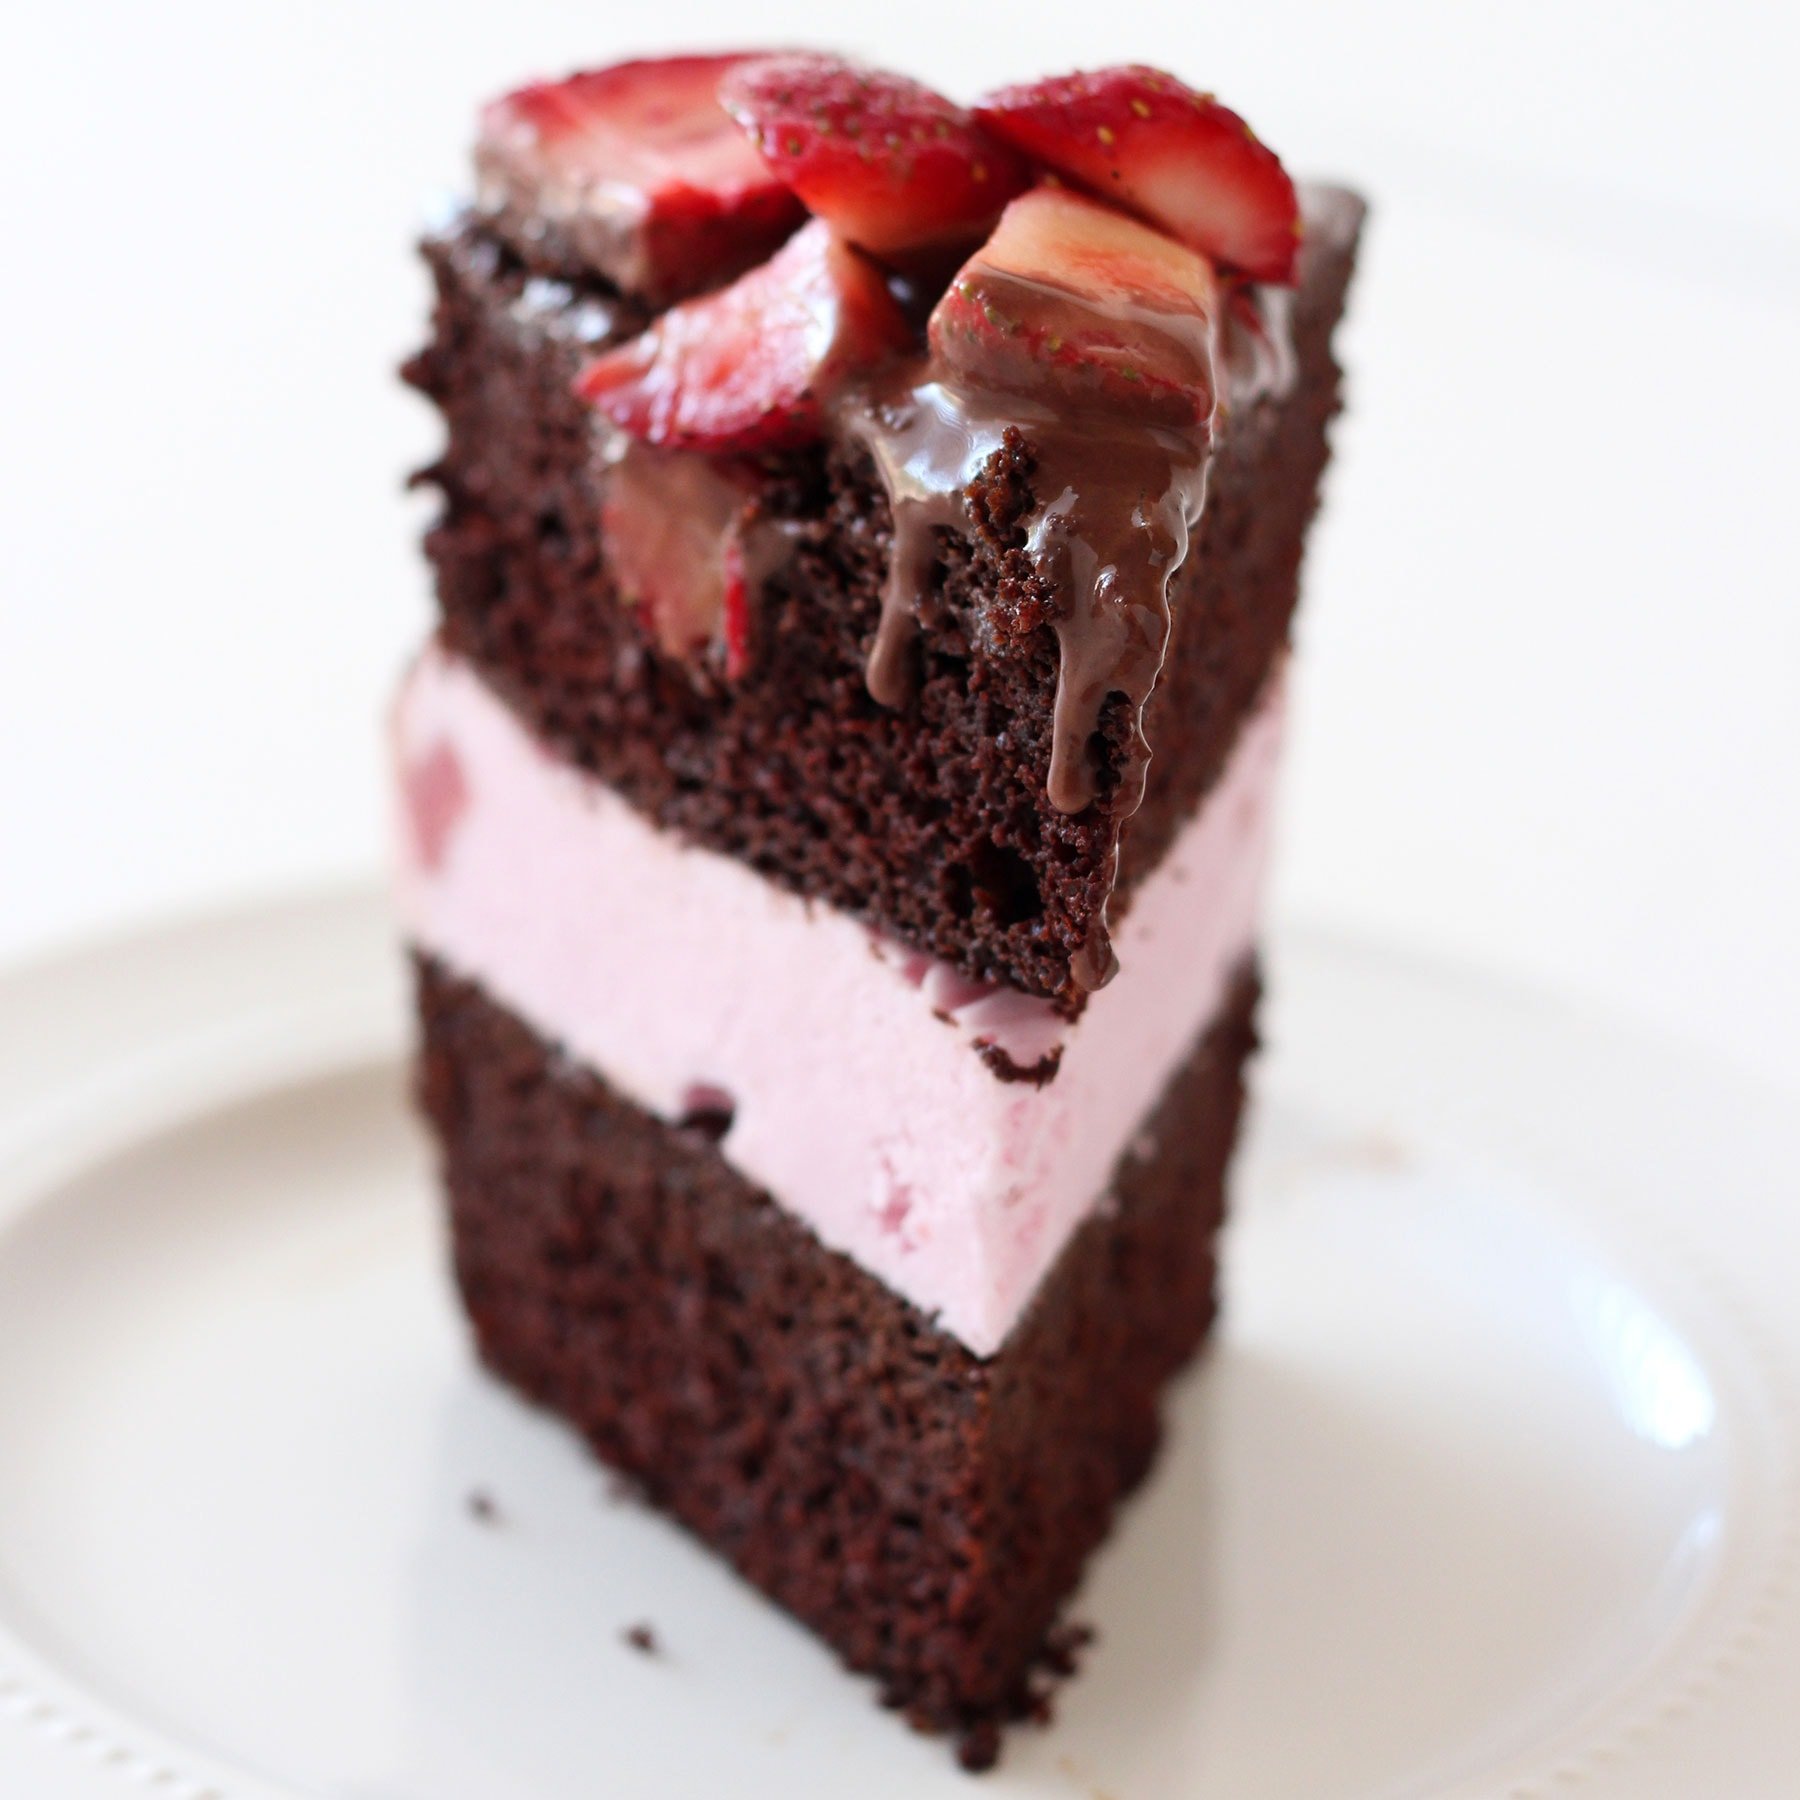 Chocolate Covered Strawberry Ice Cream Cake